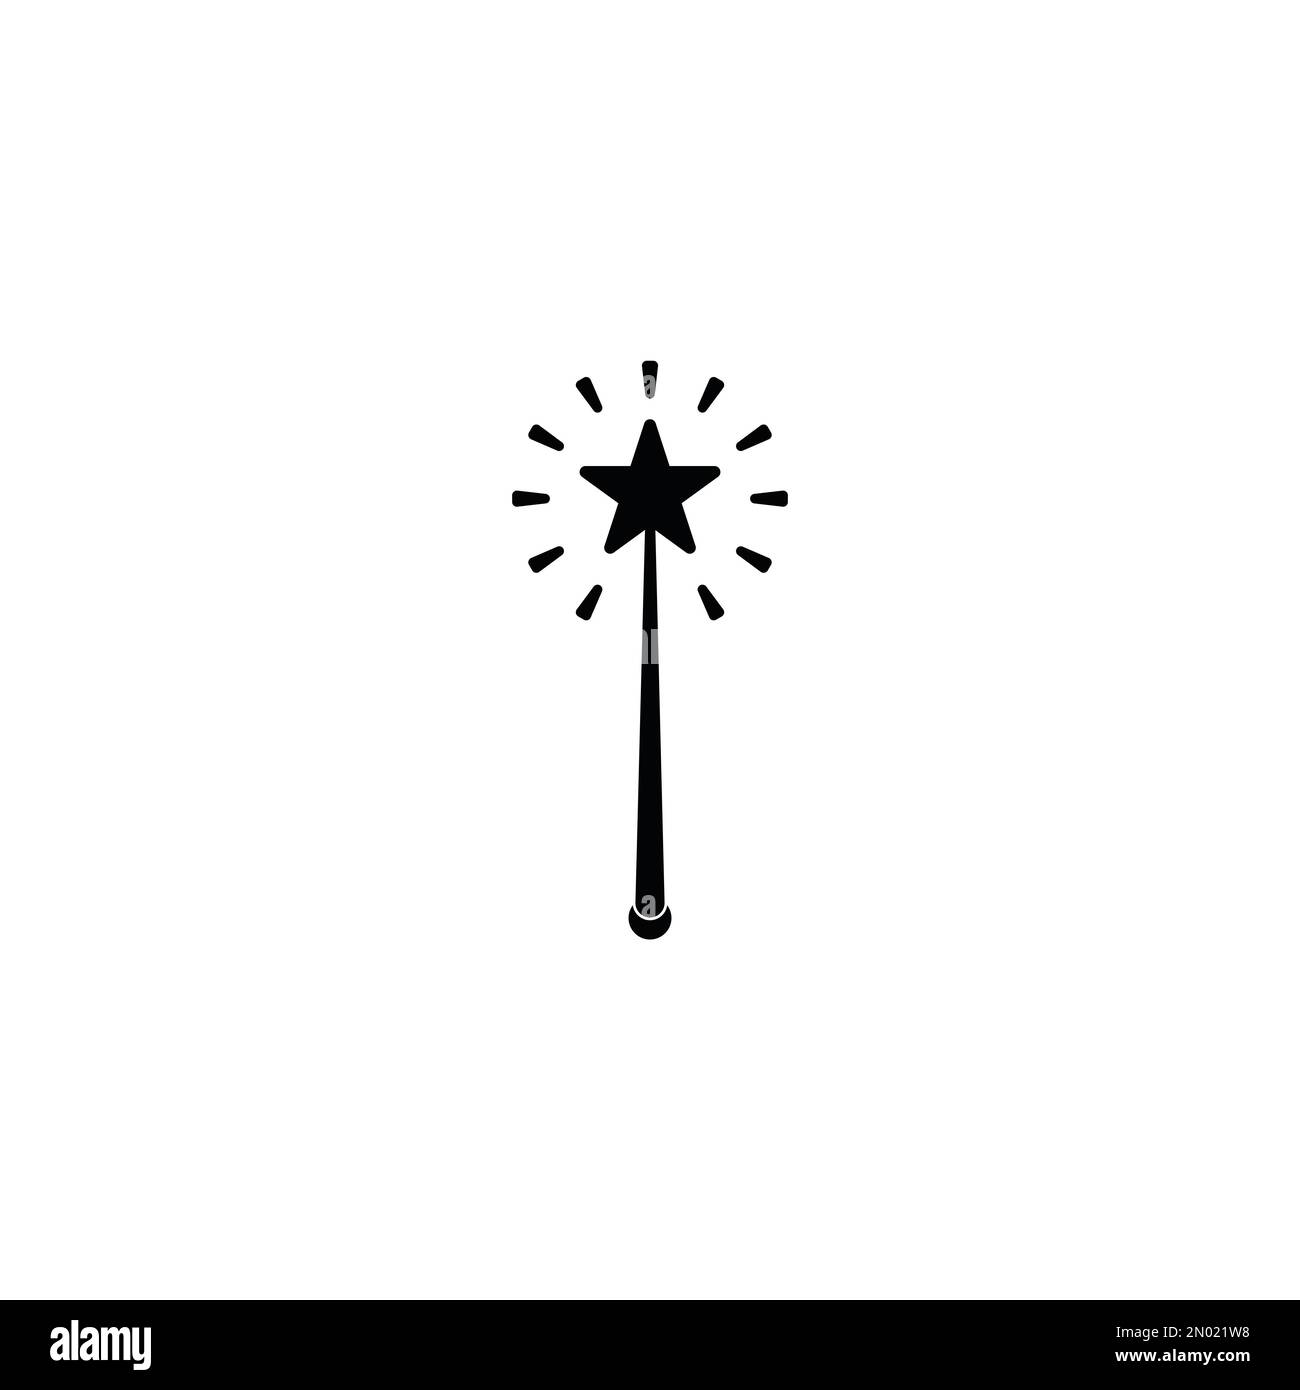 magic wand logo vector illustration design Stock Vector